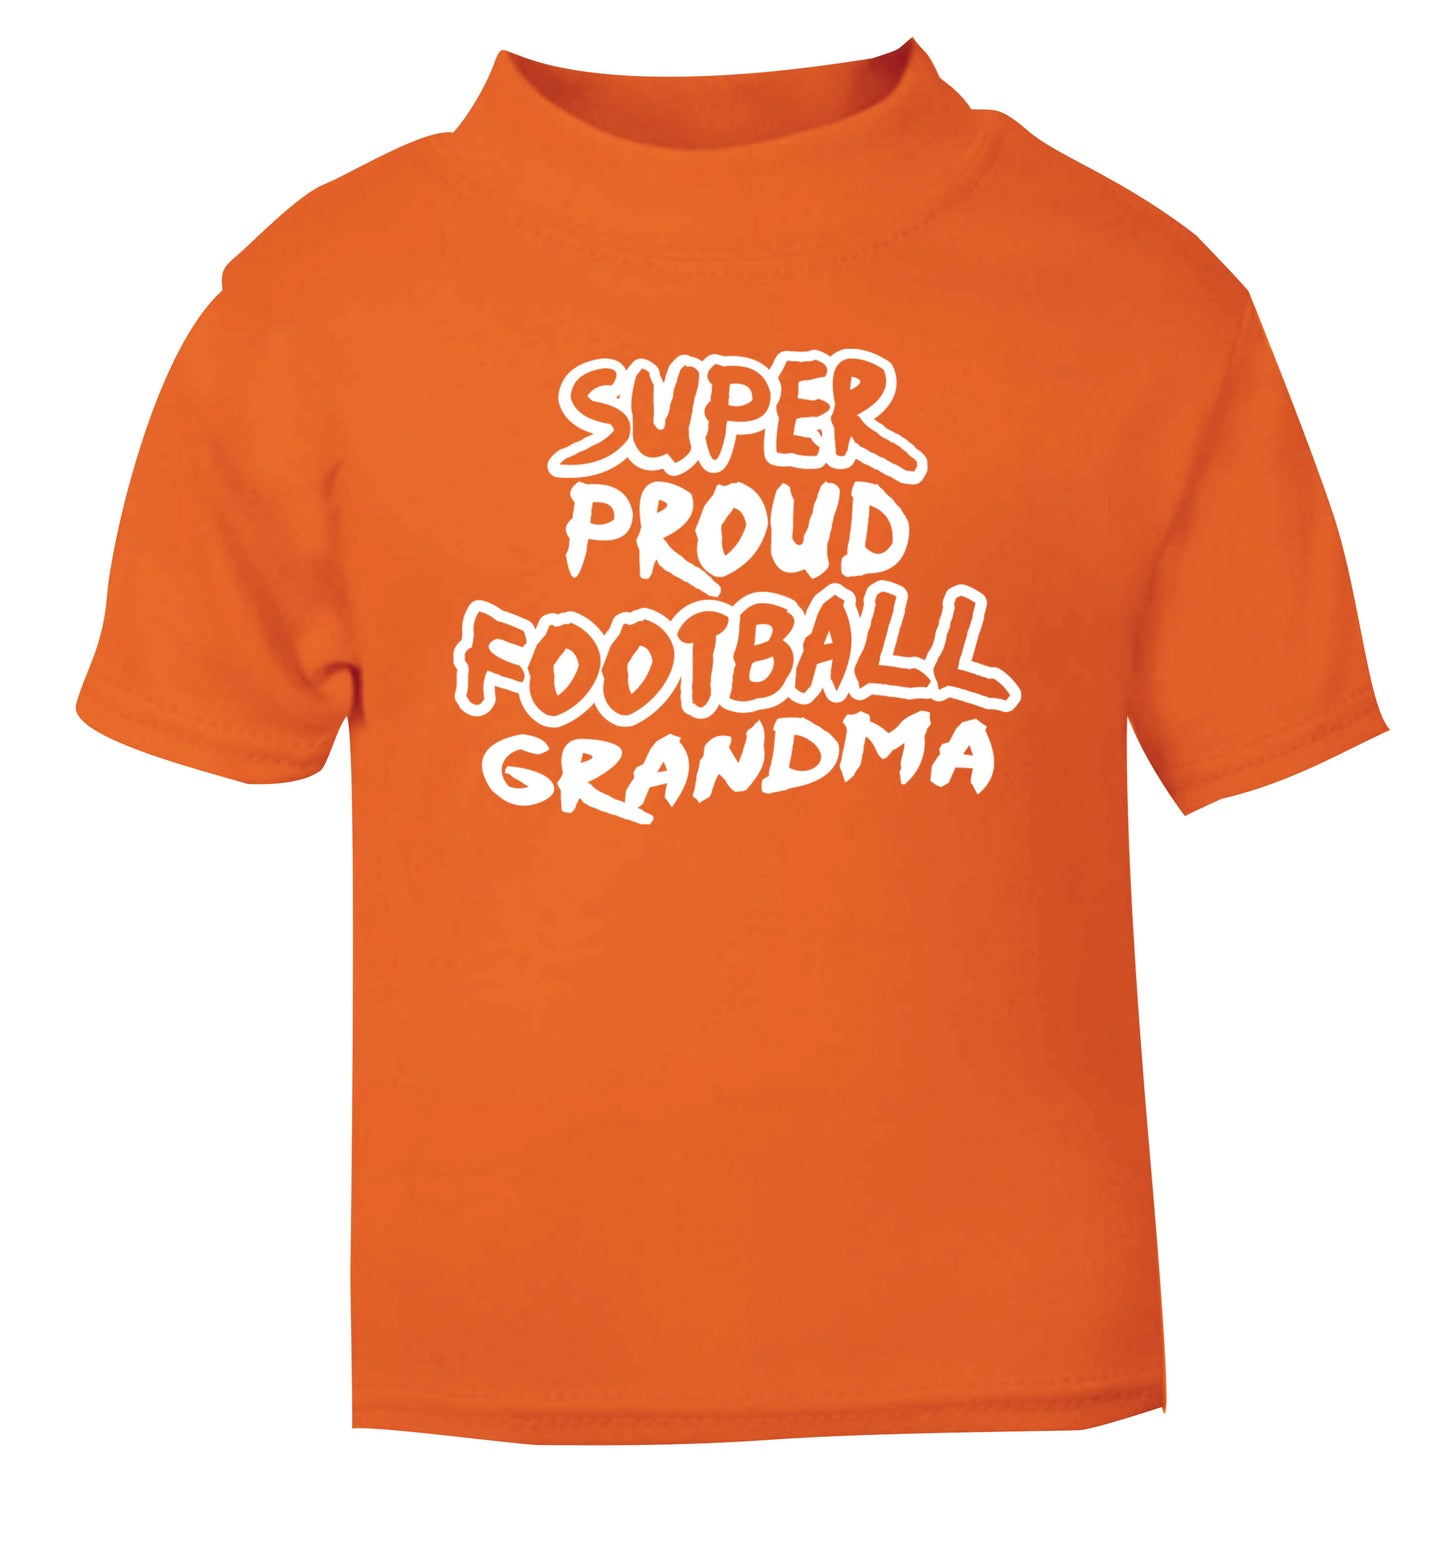 Super proud football grandma orange Baby Toddler Tshirt 2 Years